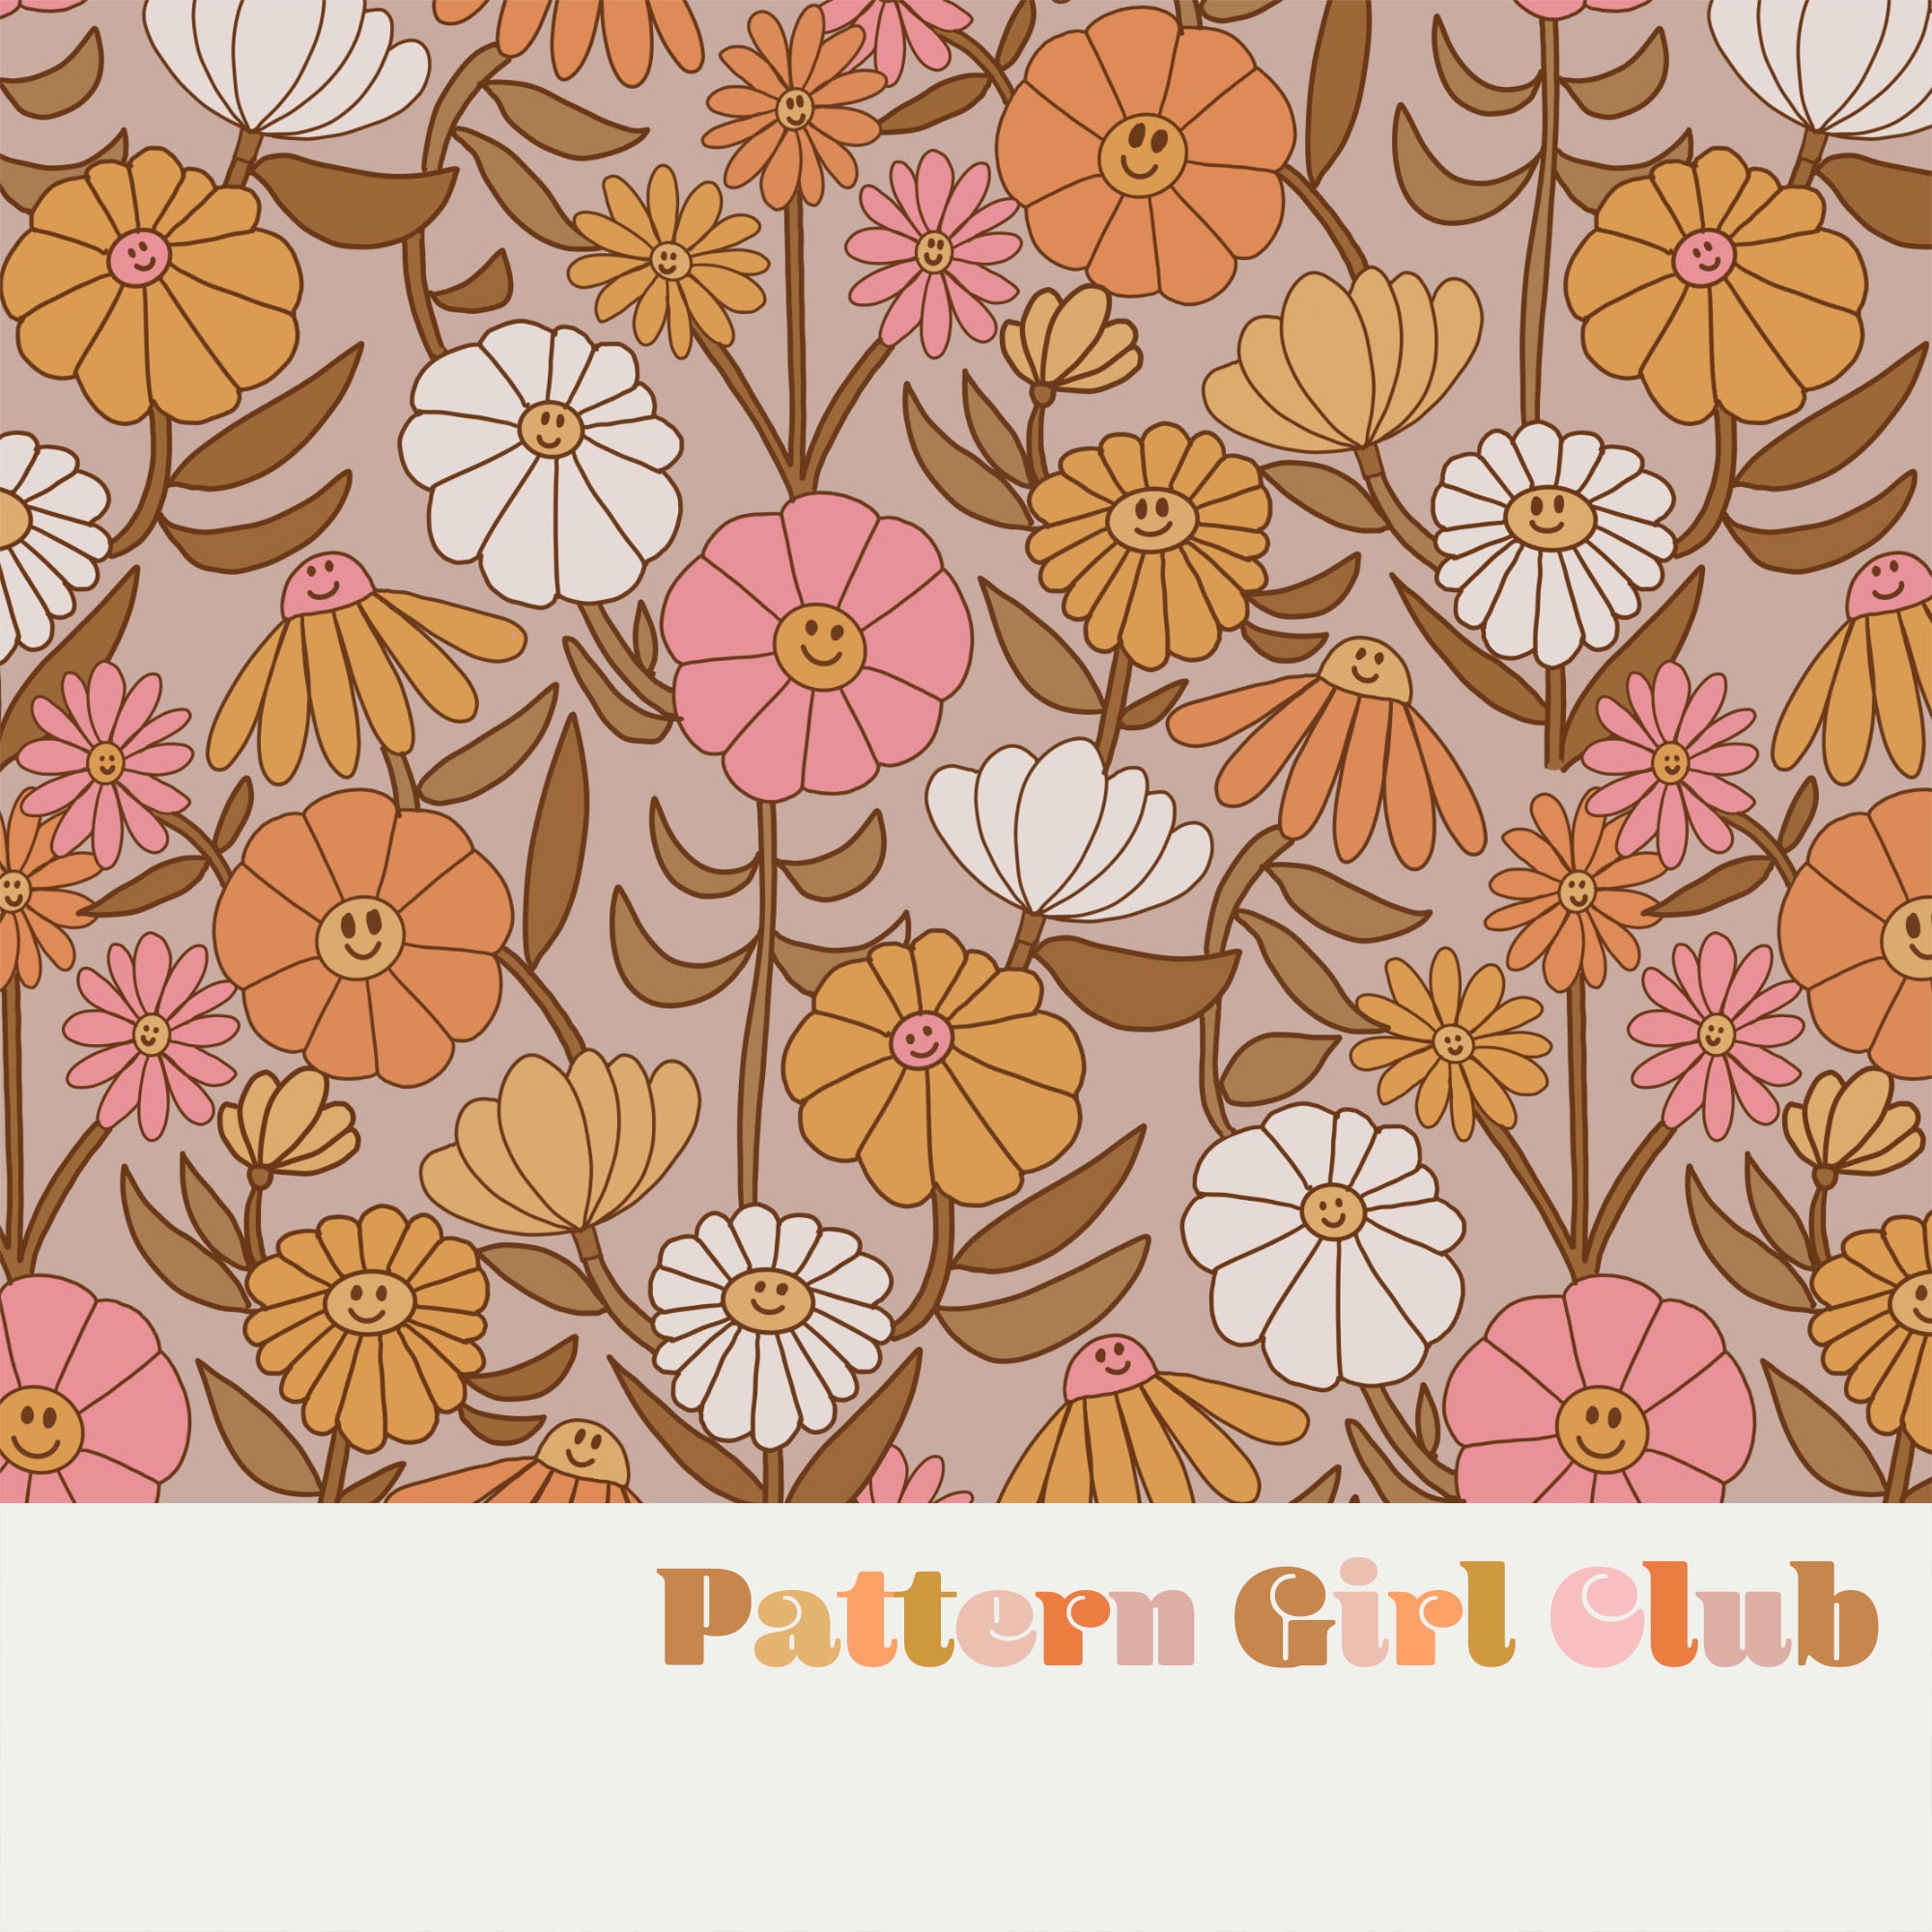 Retro 70s hippie orange flowers seamless pattern Vector Image